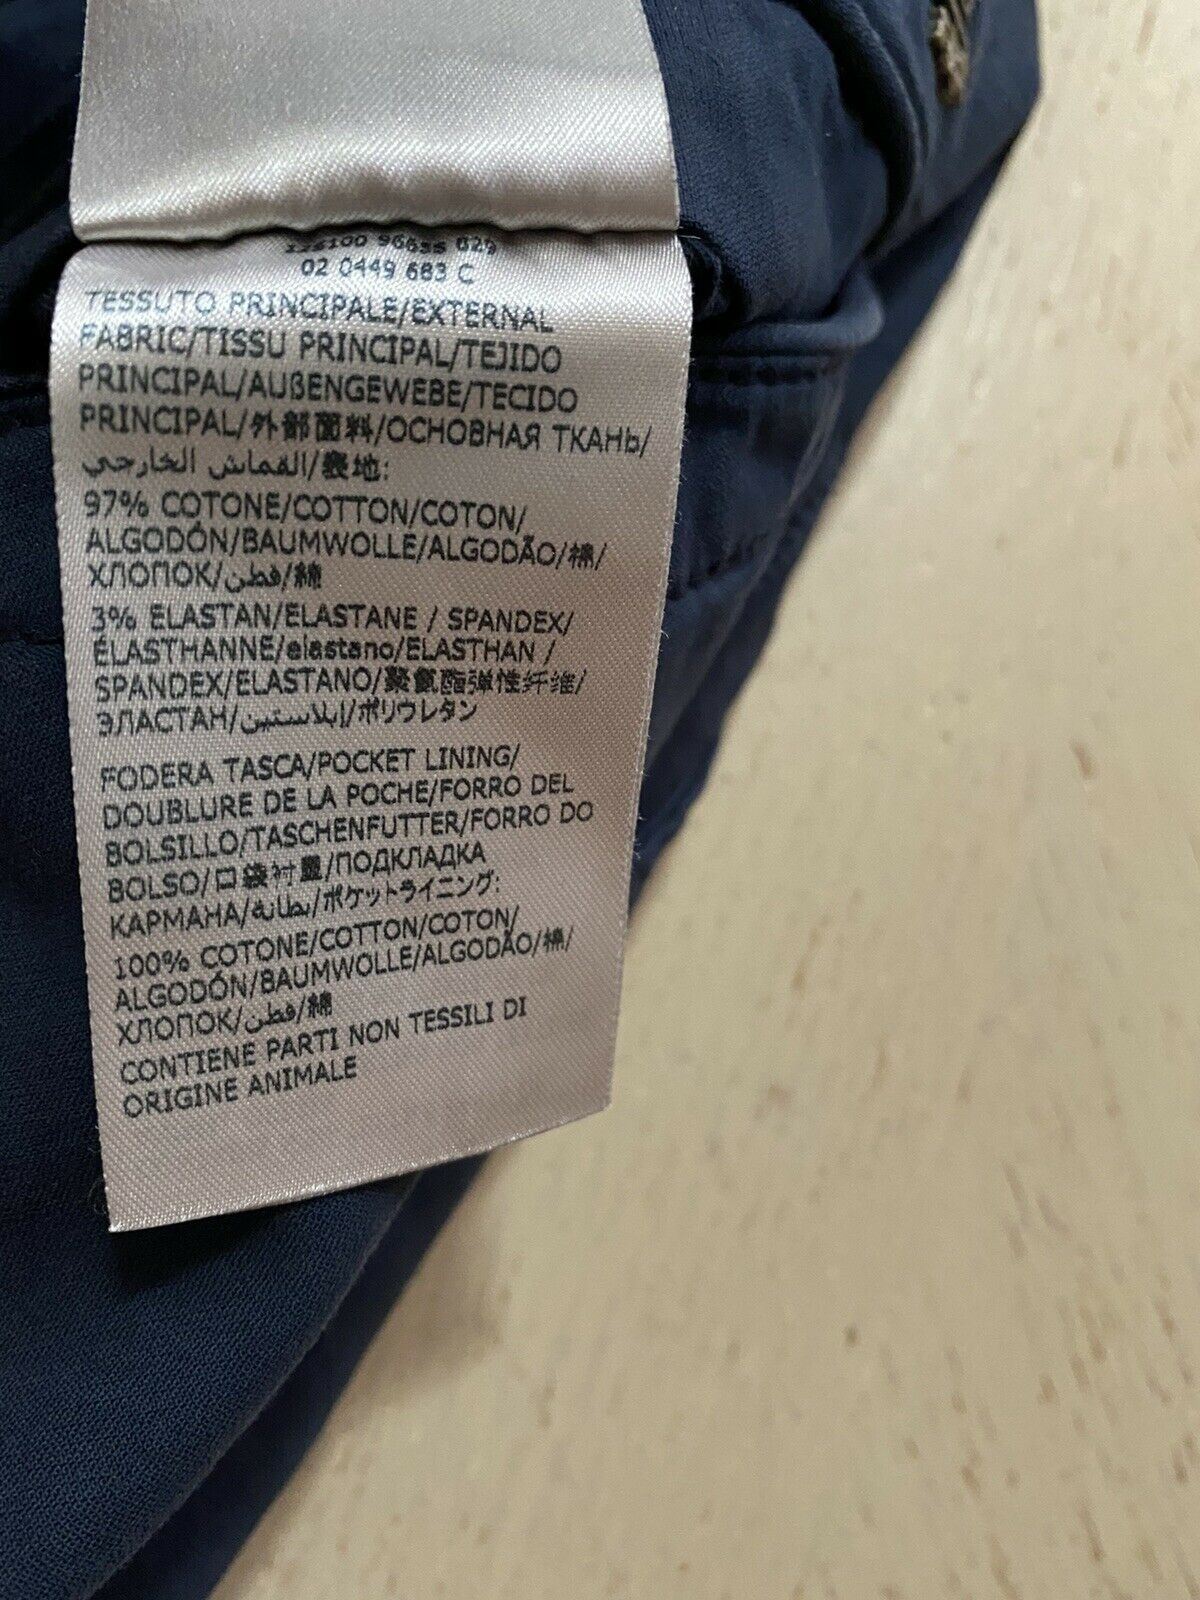 NWT S395 Incotex Mens Slim Fit Pants Bright Blue 40 US ( 56 Eu )